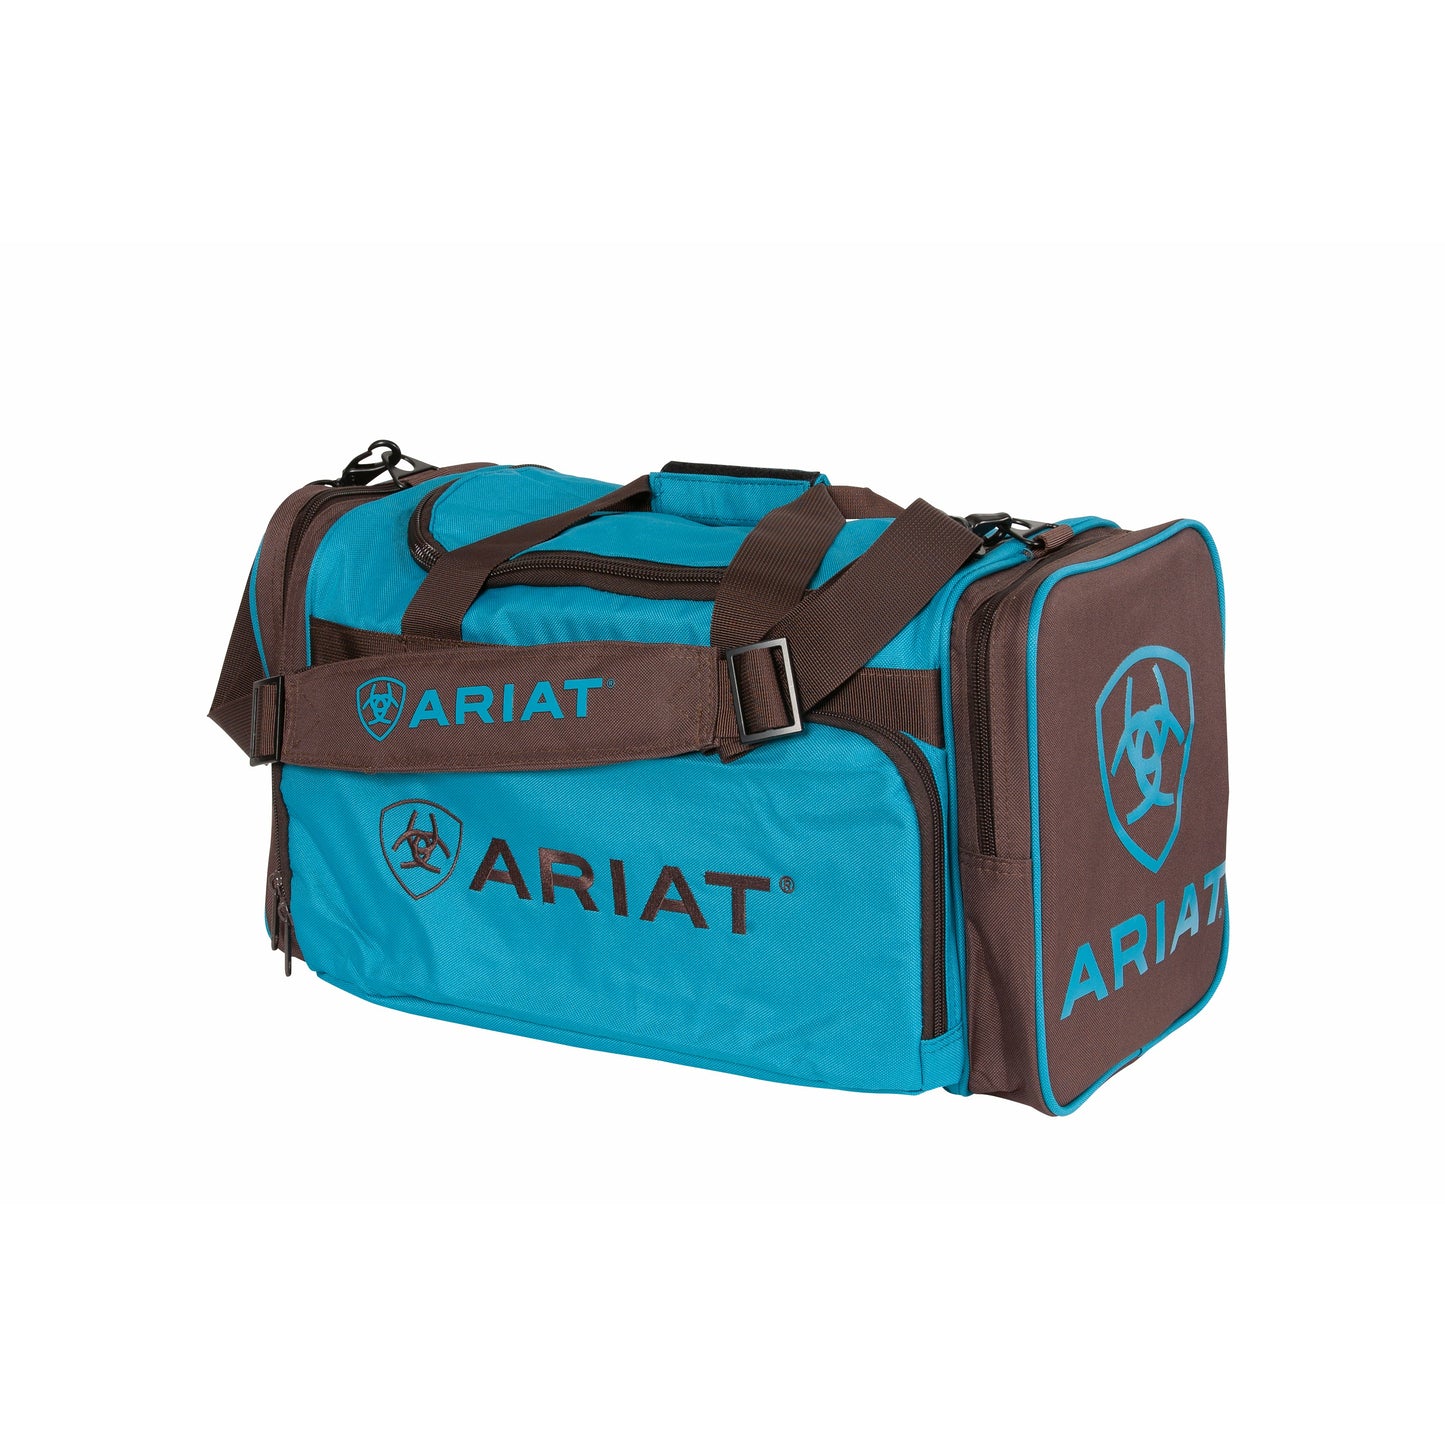 Ariat Junior Gear Bag Turquoise/Brown